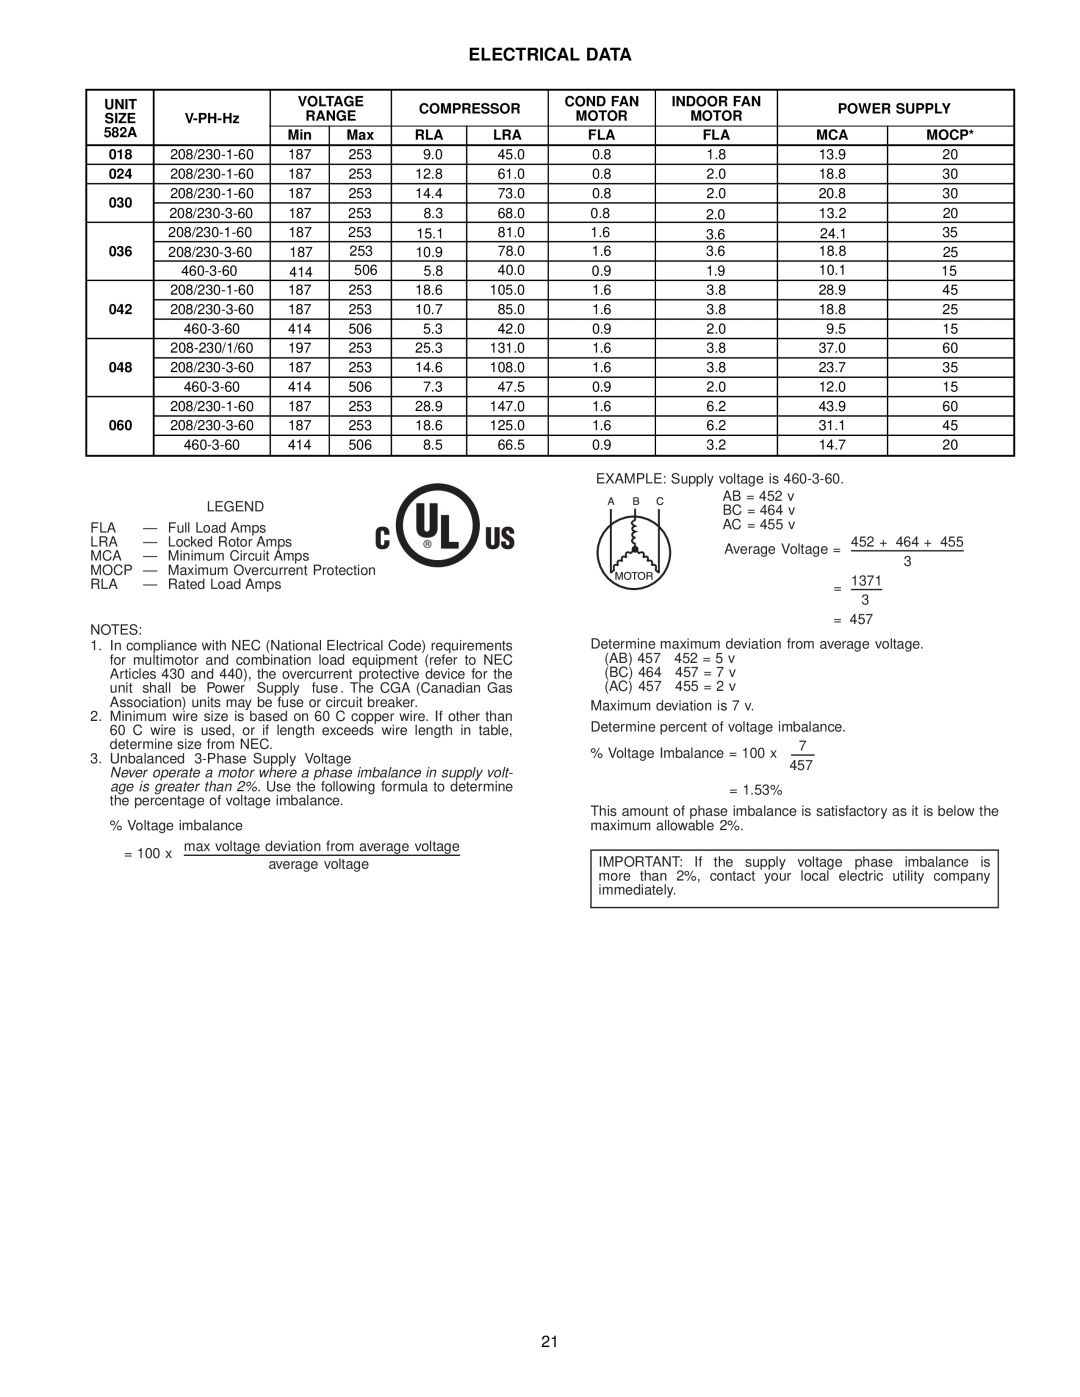 Bryant 582A manual Electrical Data 